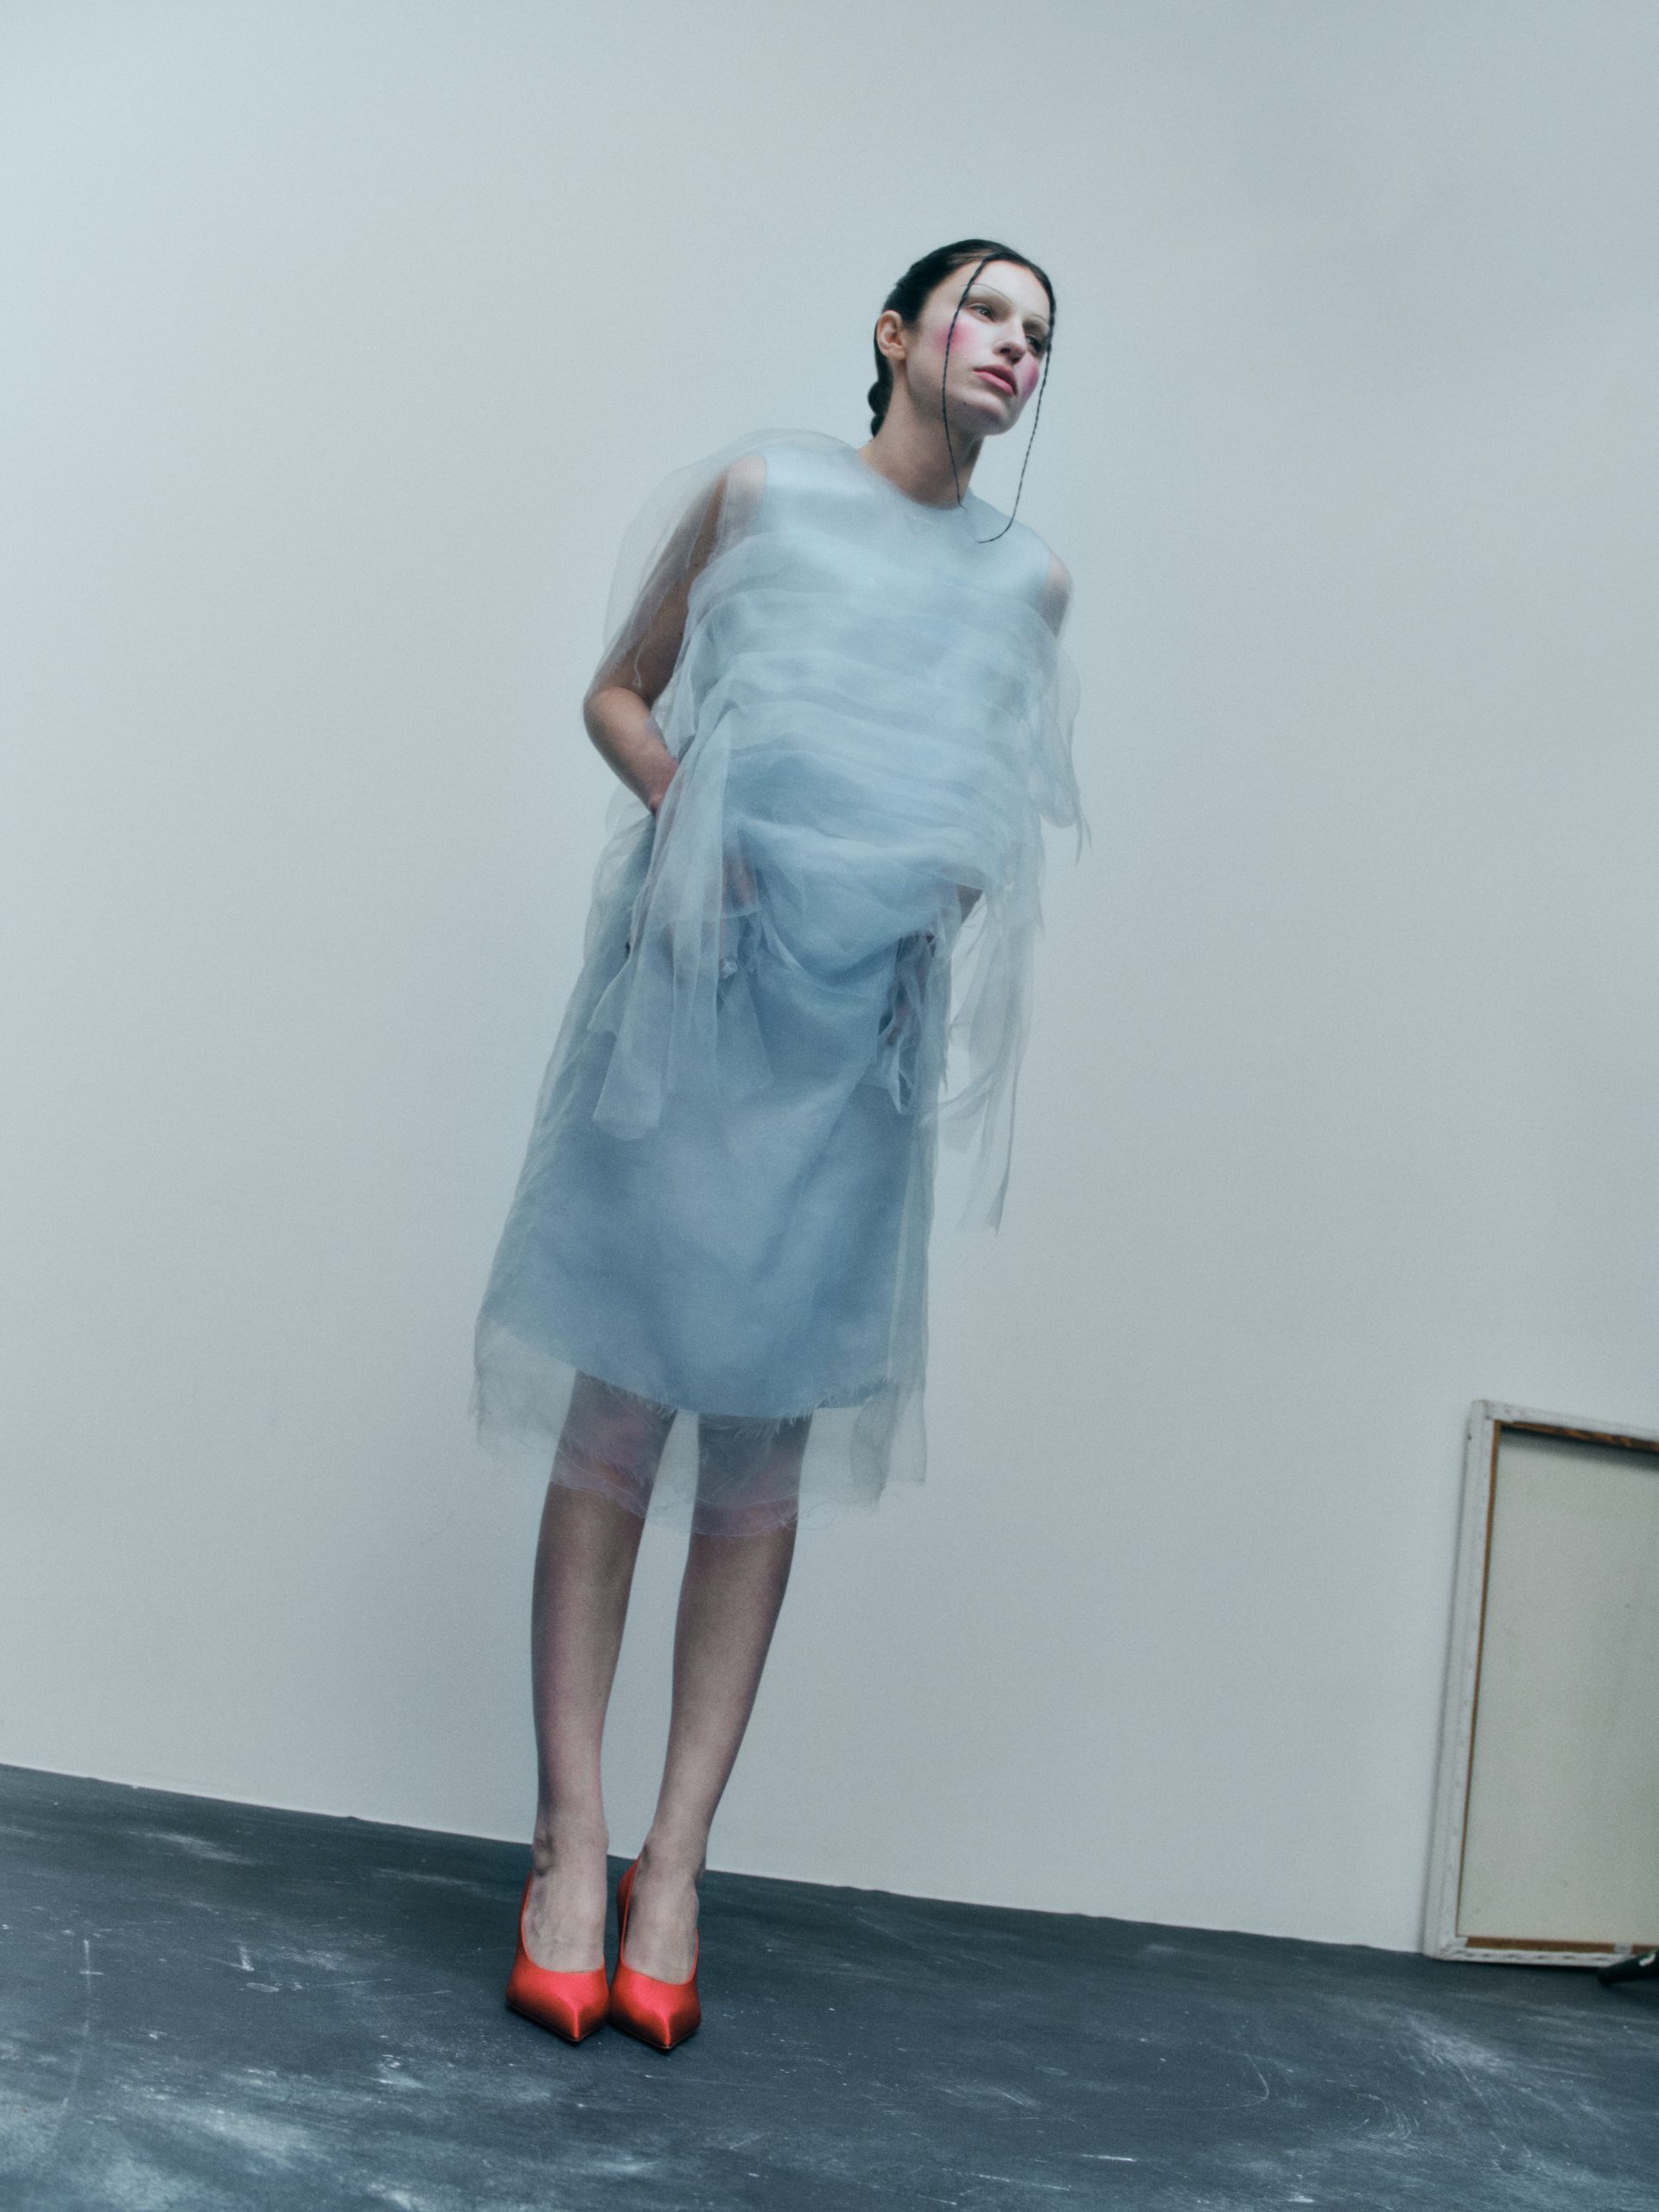 Tali wears dress and heels Prada. Photography Olivia Malone, styling Carolina Orrico